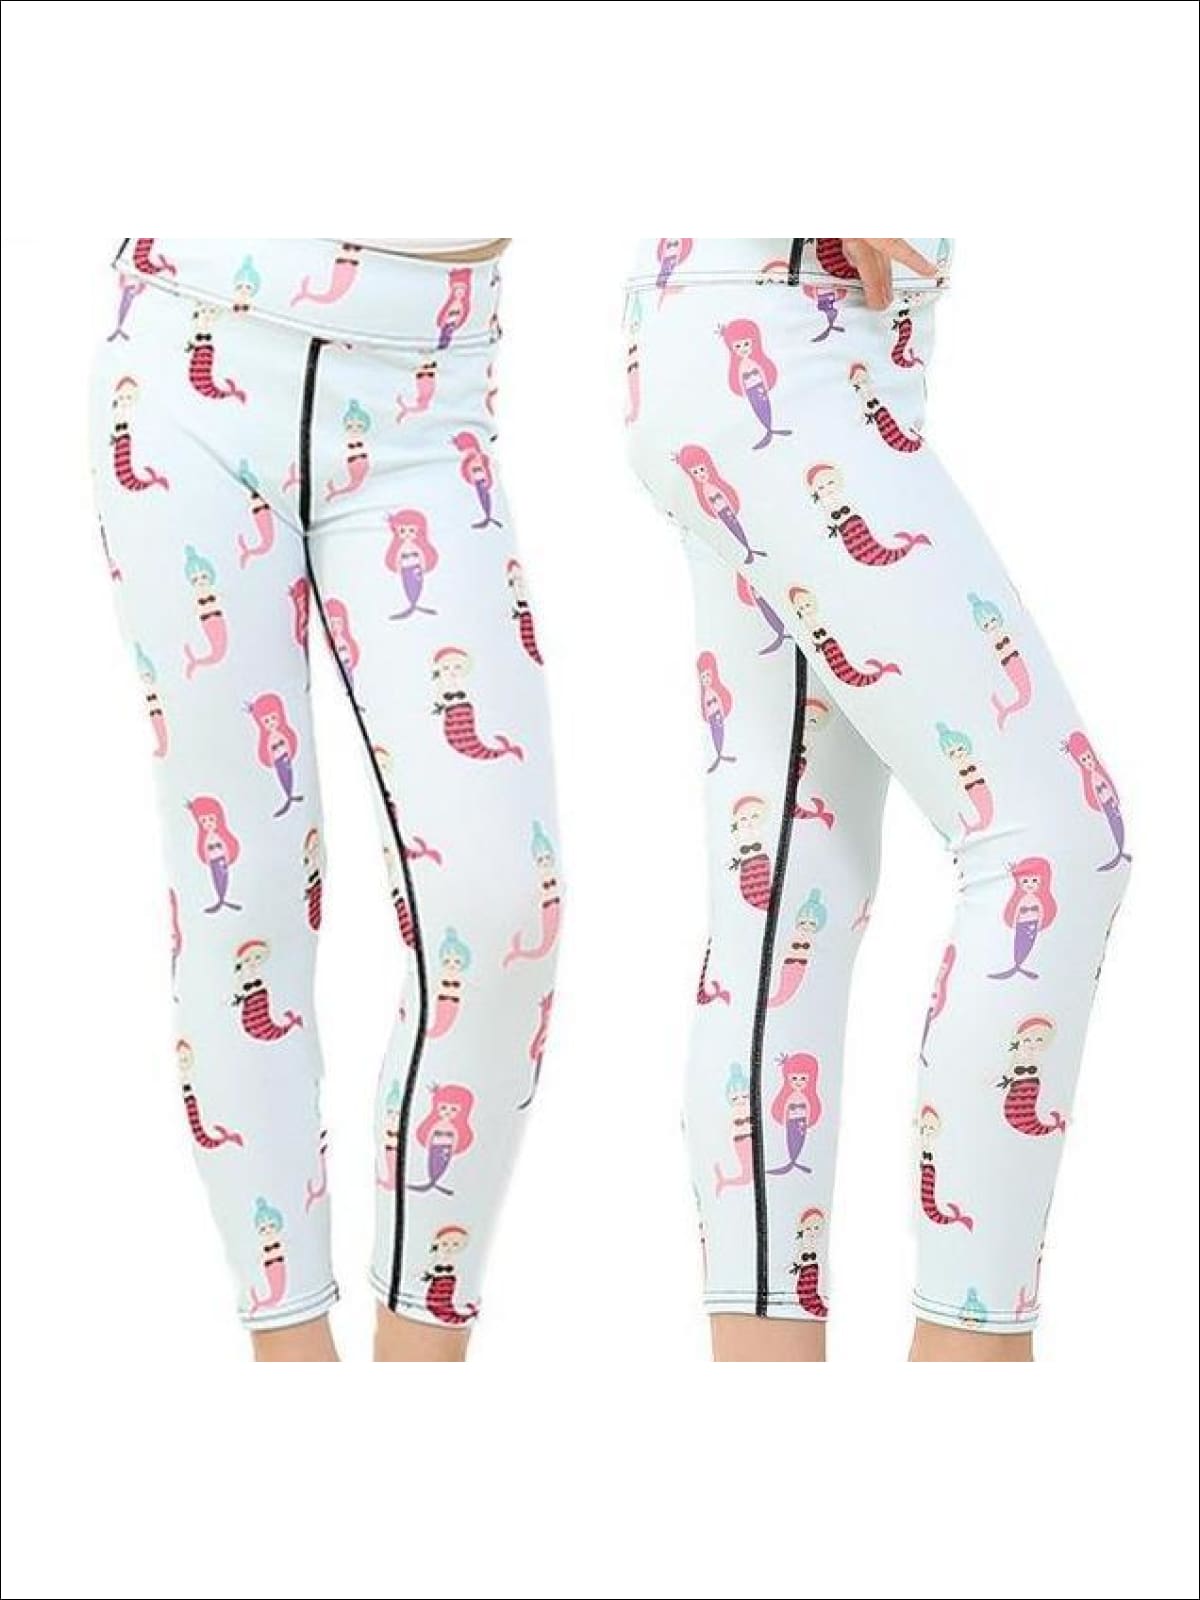 Girls Striped Unicorn Leggings (11 Style Options) - Mermaids / 4T - 5Y / Similar to image - Yoga Pants